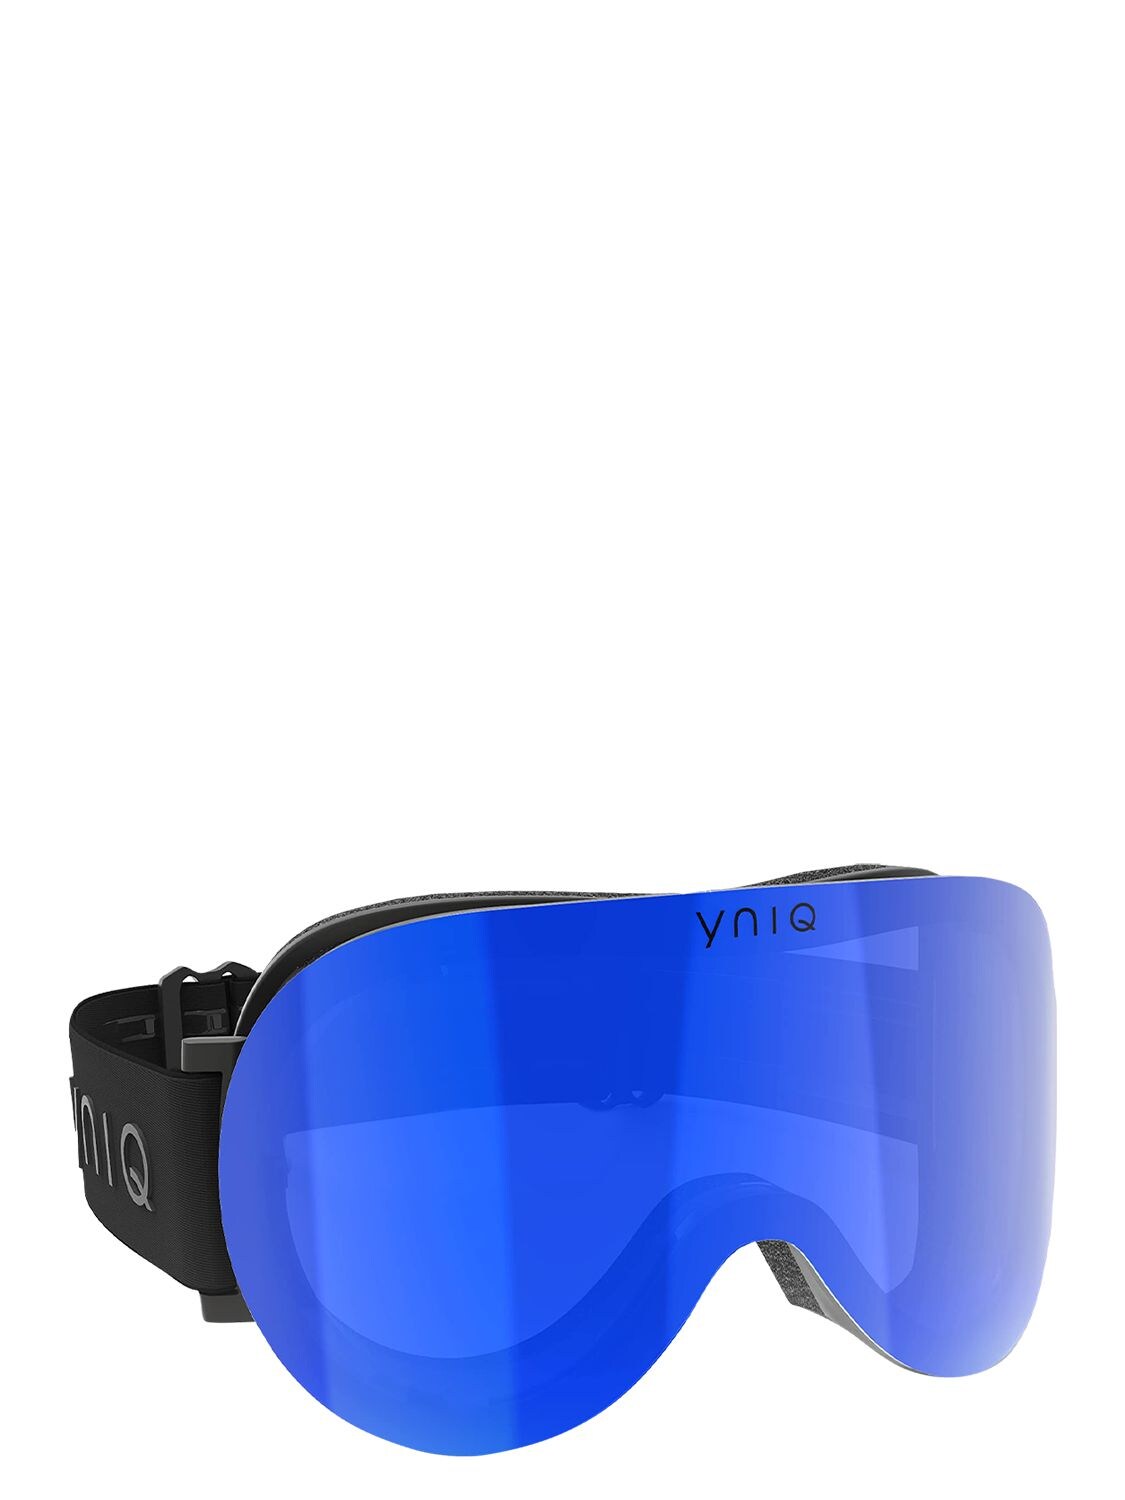 Two Blue Lens Ski Goggles